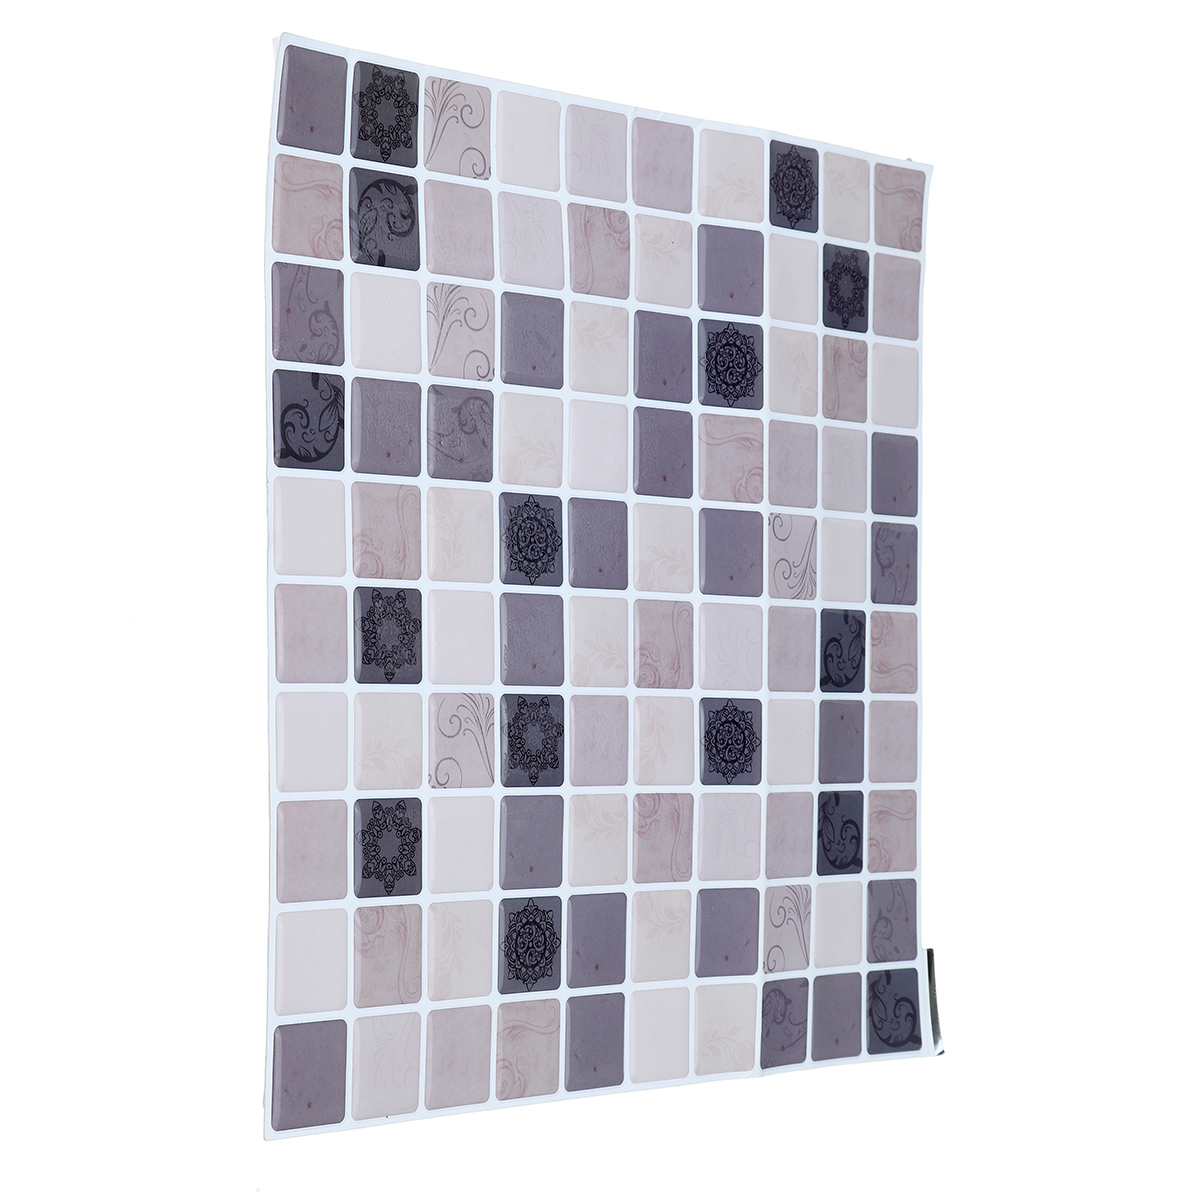 10-10-3D-Wall-Sticker-Bathroom-PVC-Adhesive-Decals-Art-Sticker-Poster-Decoration-1814450-5